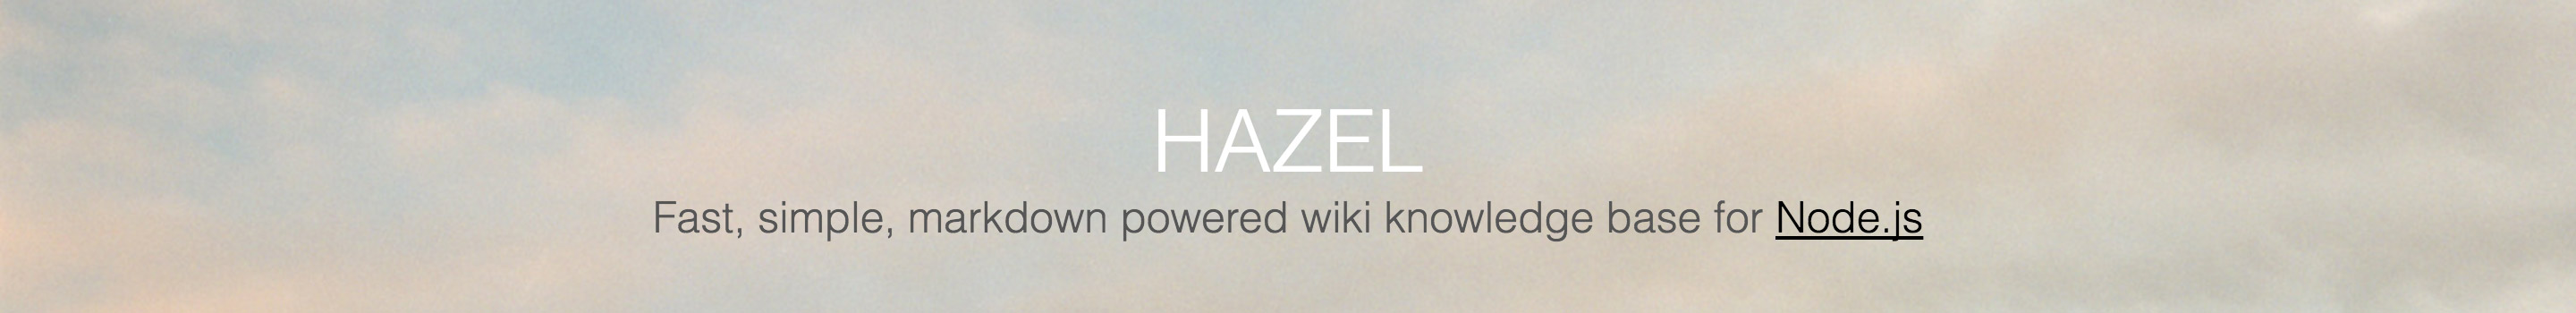 Hazel: Fast, simple, markdown powered wiki knowledge base for NodeJs